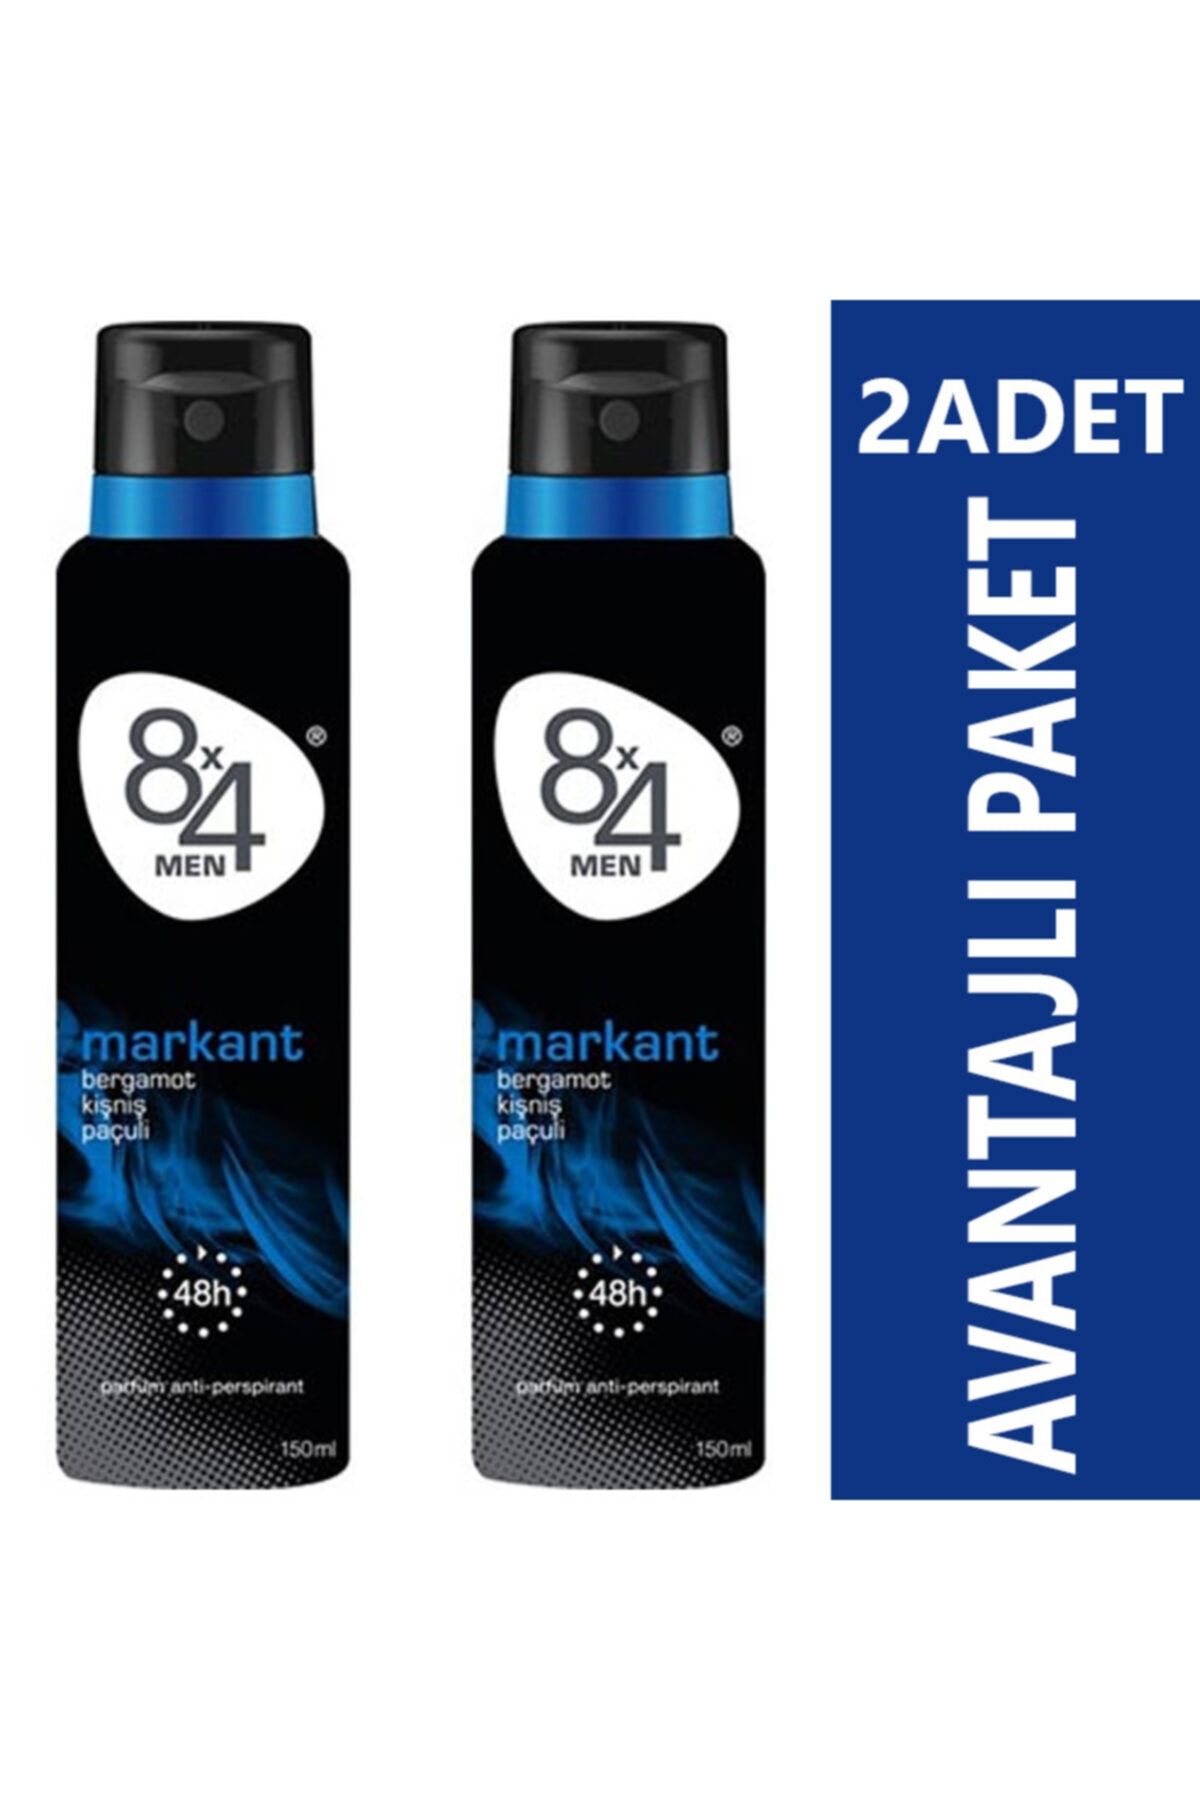 8x4 Markant Sprey 150ml Erkek Deodorant - Avantajlı Paket 2 Adet